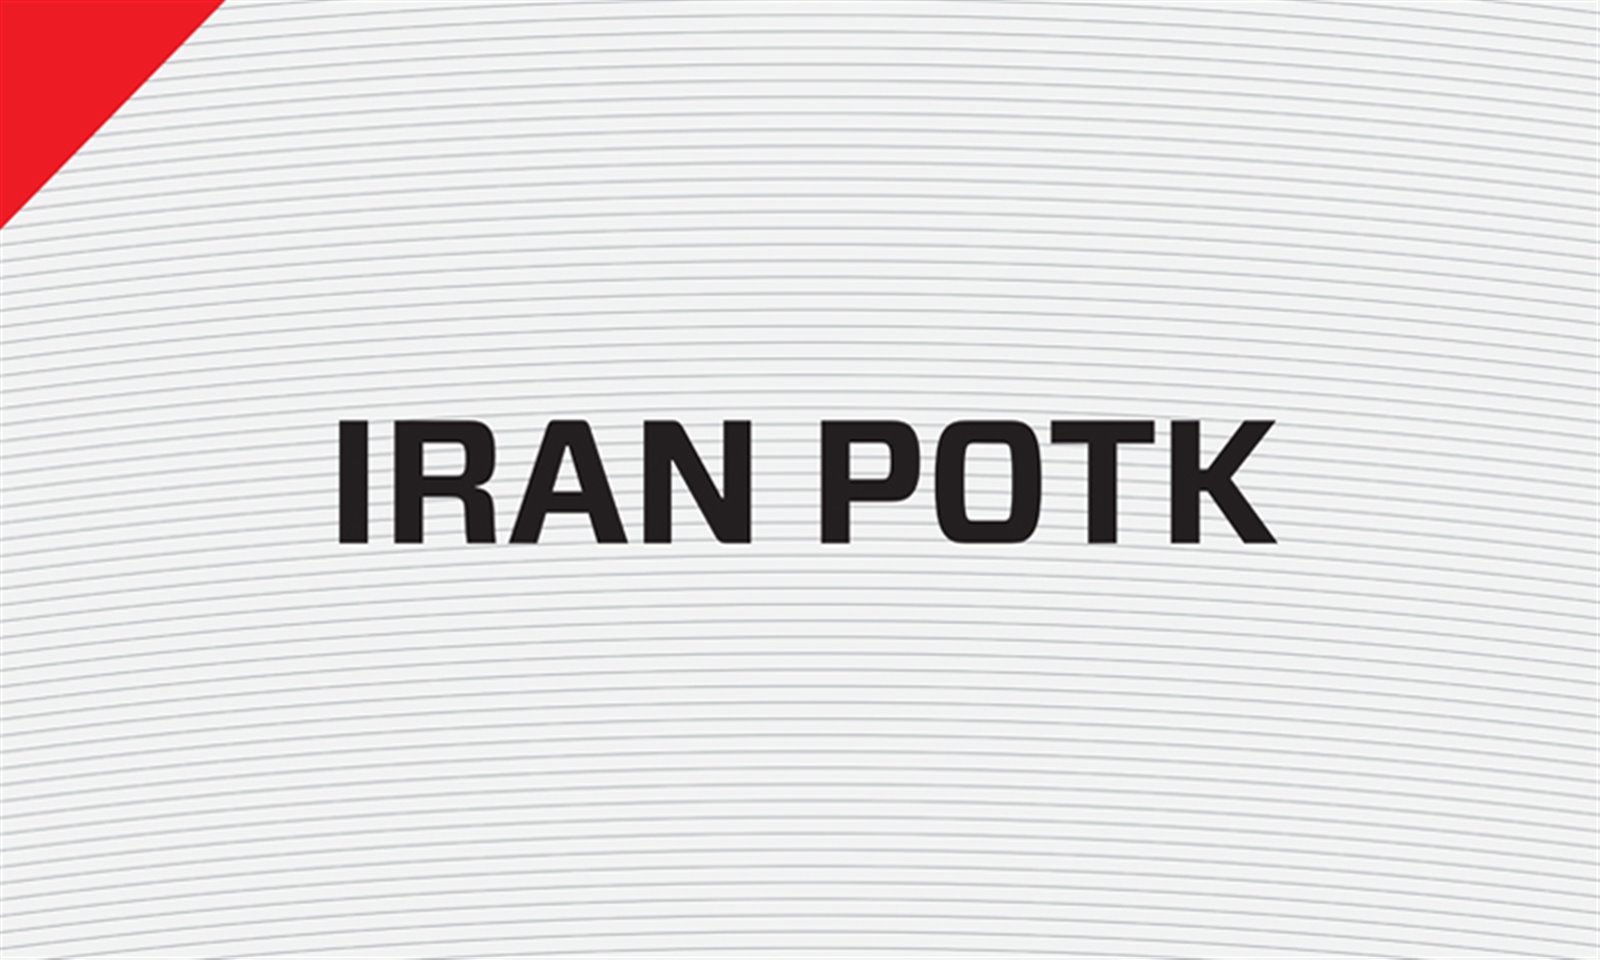 IRAN POTK